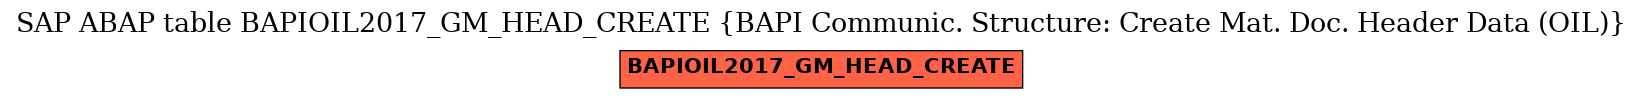 E-R Diagram for table BAPIOIL2017_GM_HEAD_CREATE (BAPI Communic. Structure: Create Mat. Doc. Header Data (OIL))